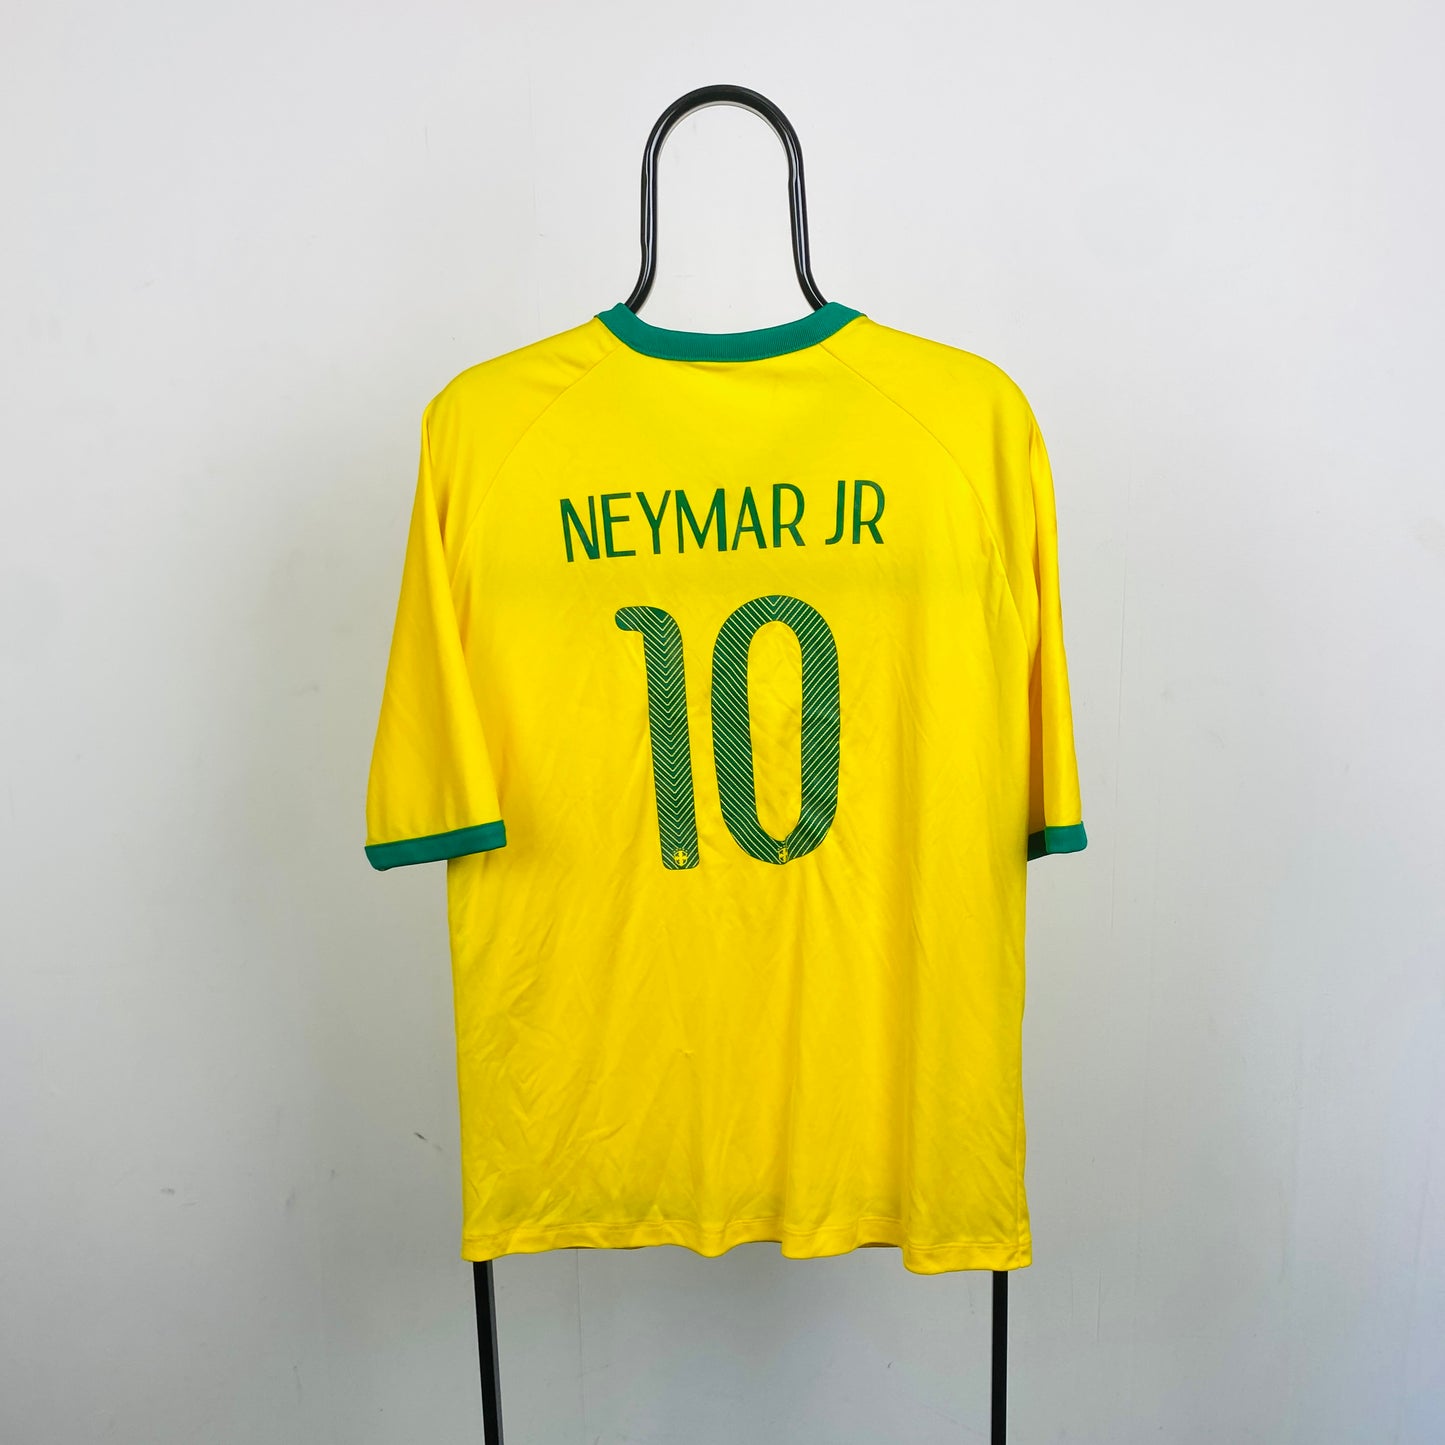 Retro Brazil Fan Style Football Shirt T-Shirt Yellow XL